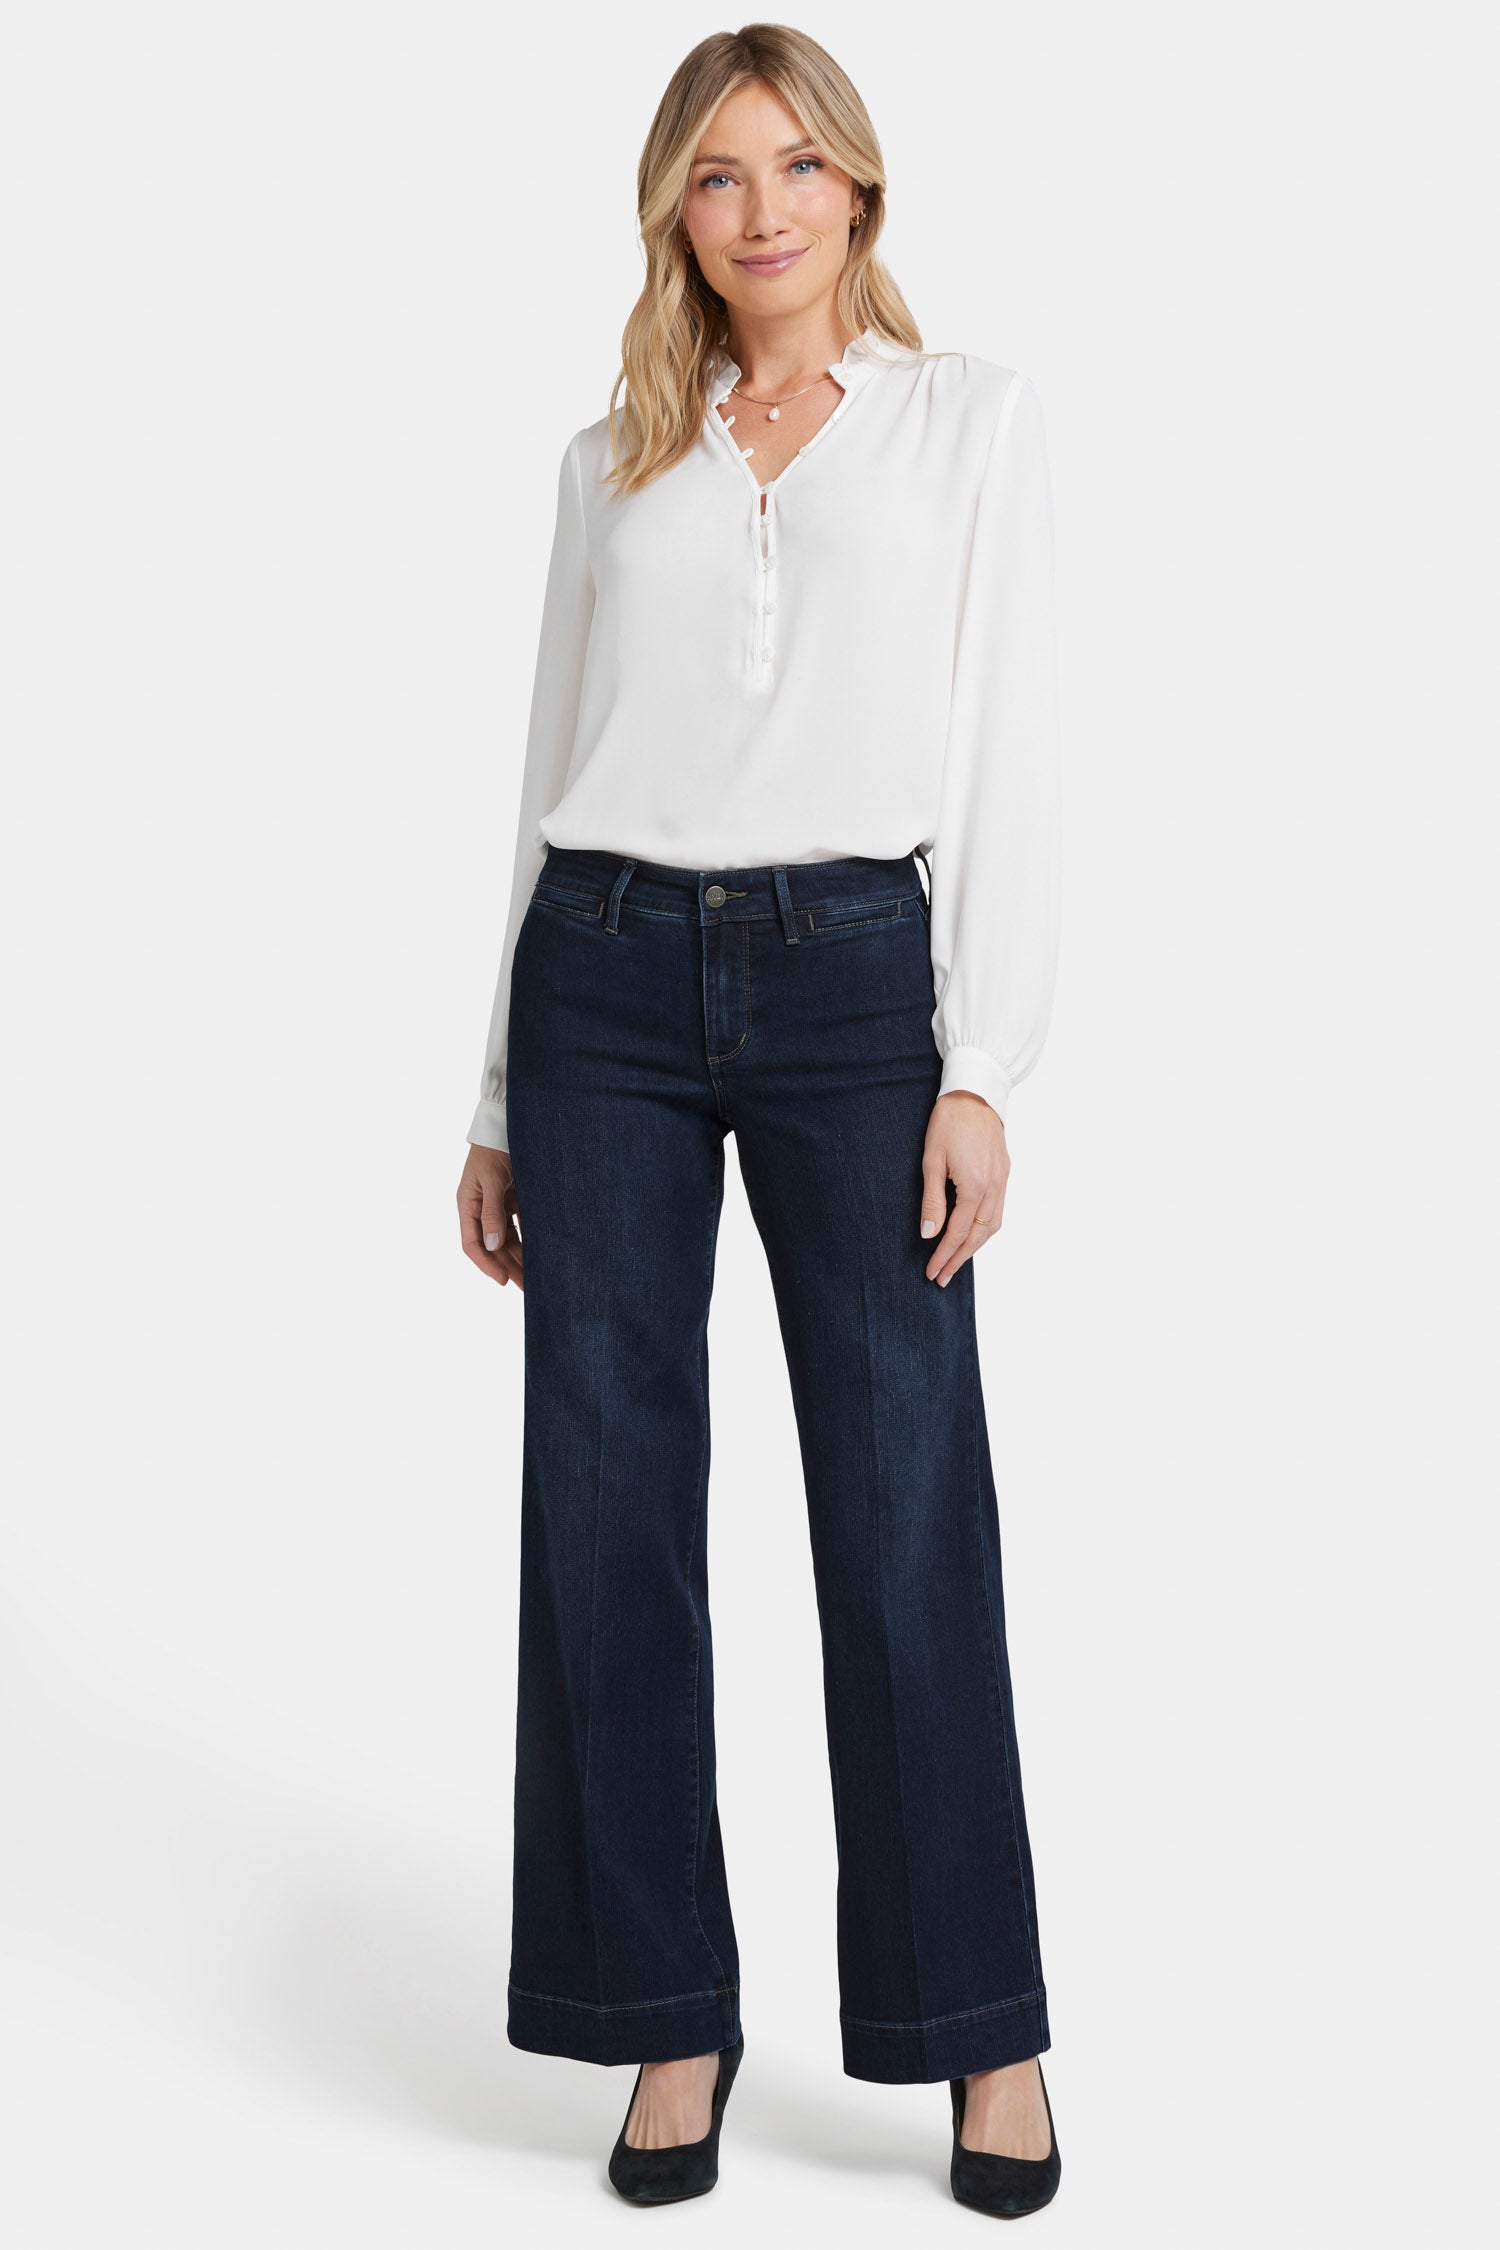 ZXHACSJ Women's Stretchy Skinny Print Jeggings Lmitation Jeans Seamless  Ninth Pants Sky Blue XL 